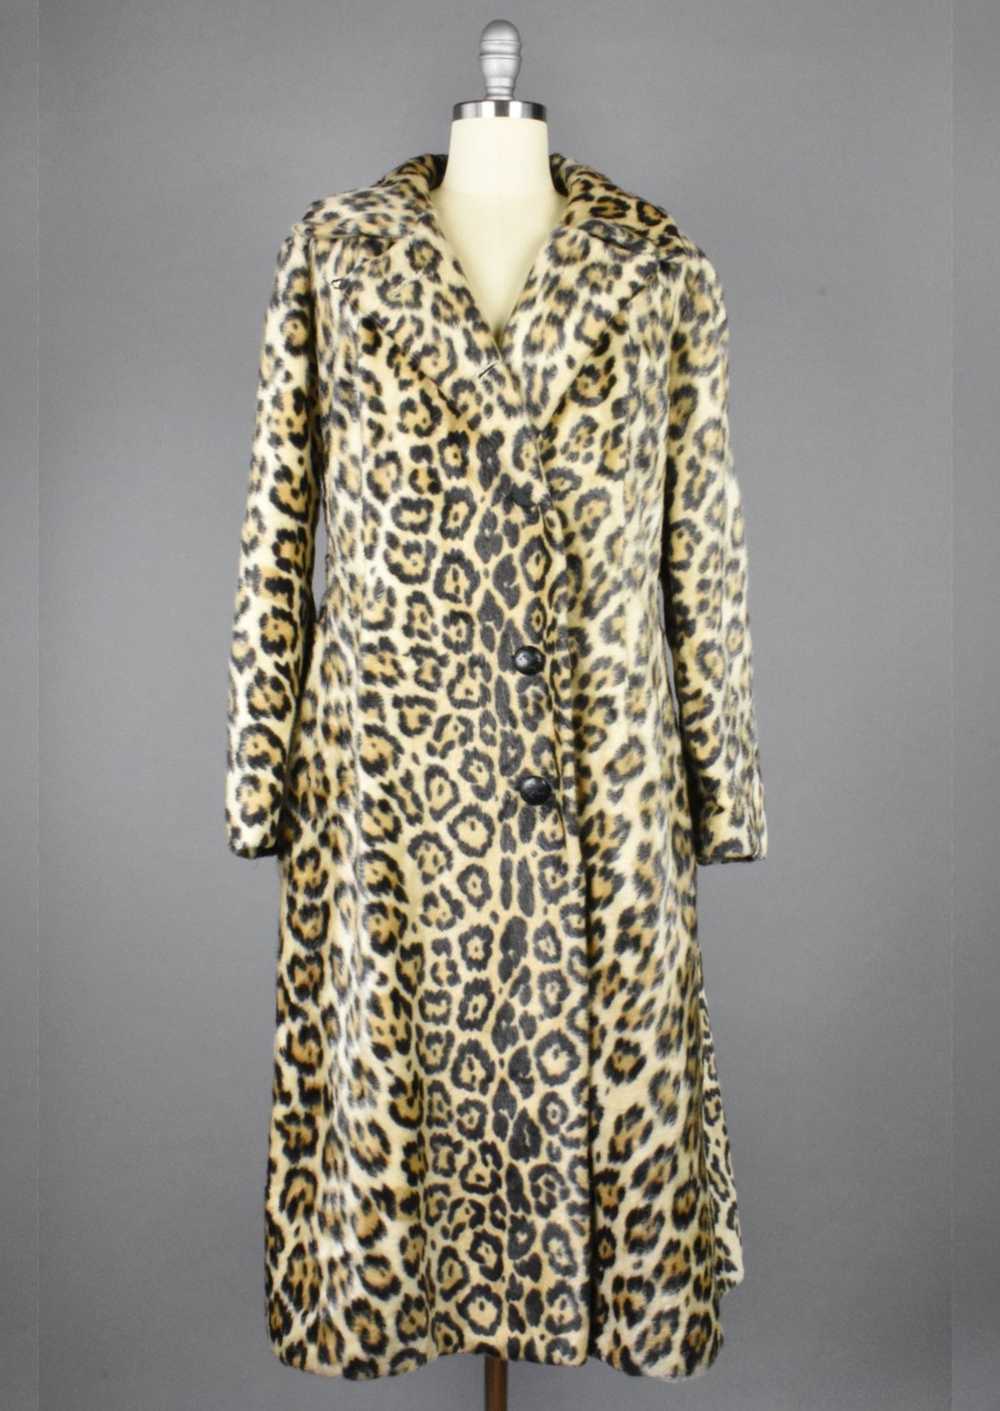 Leopard Print Faux Fur Coat by Safari - image 5